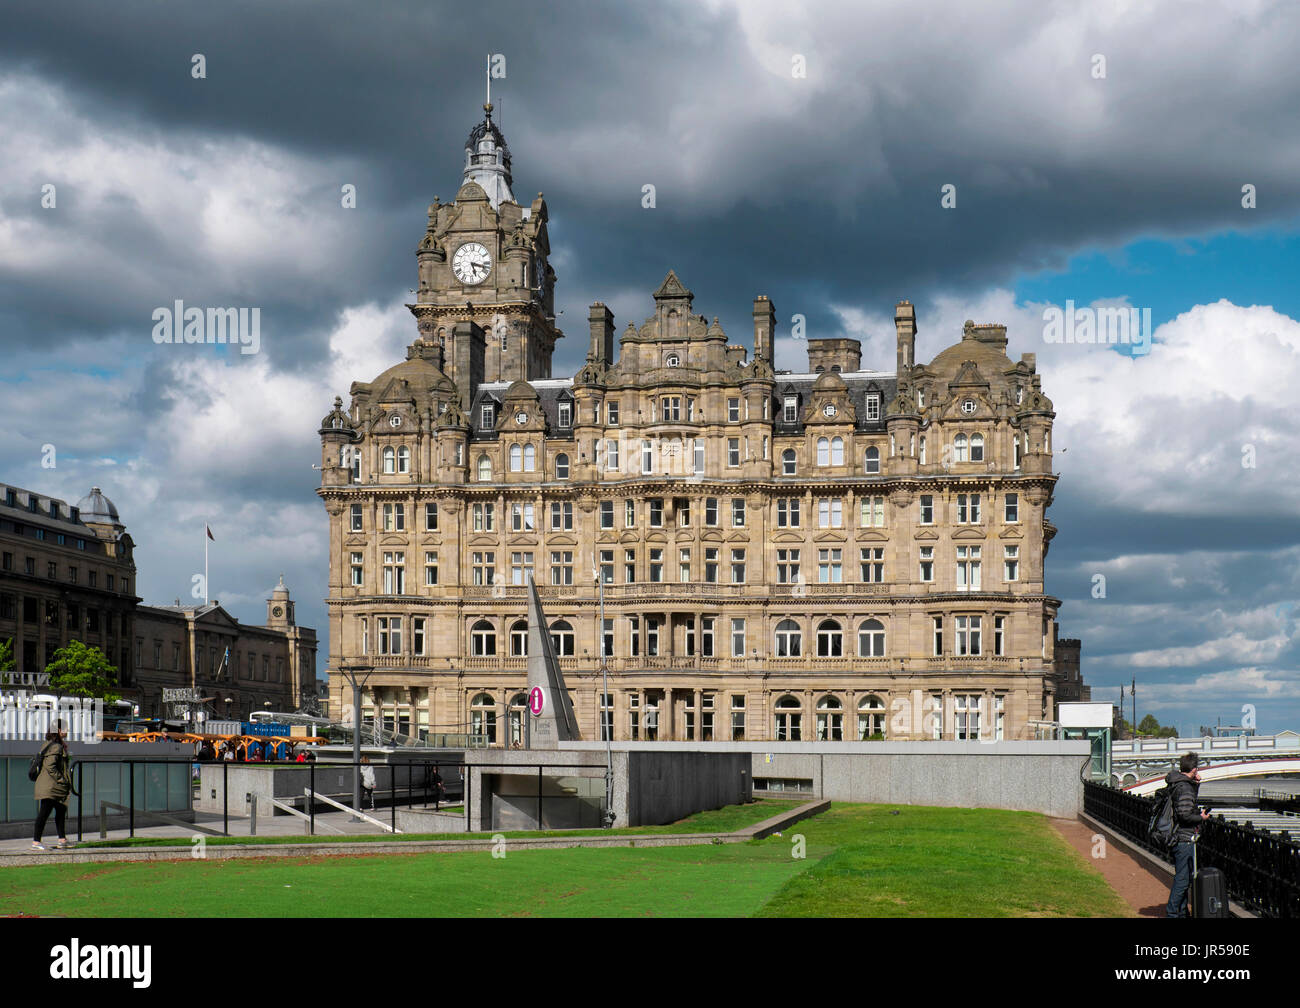 Balmoral hotel with clock tower, Edinburgh, Scotland, United Kingdom Stock Photo